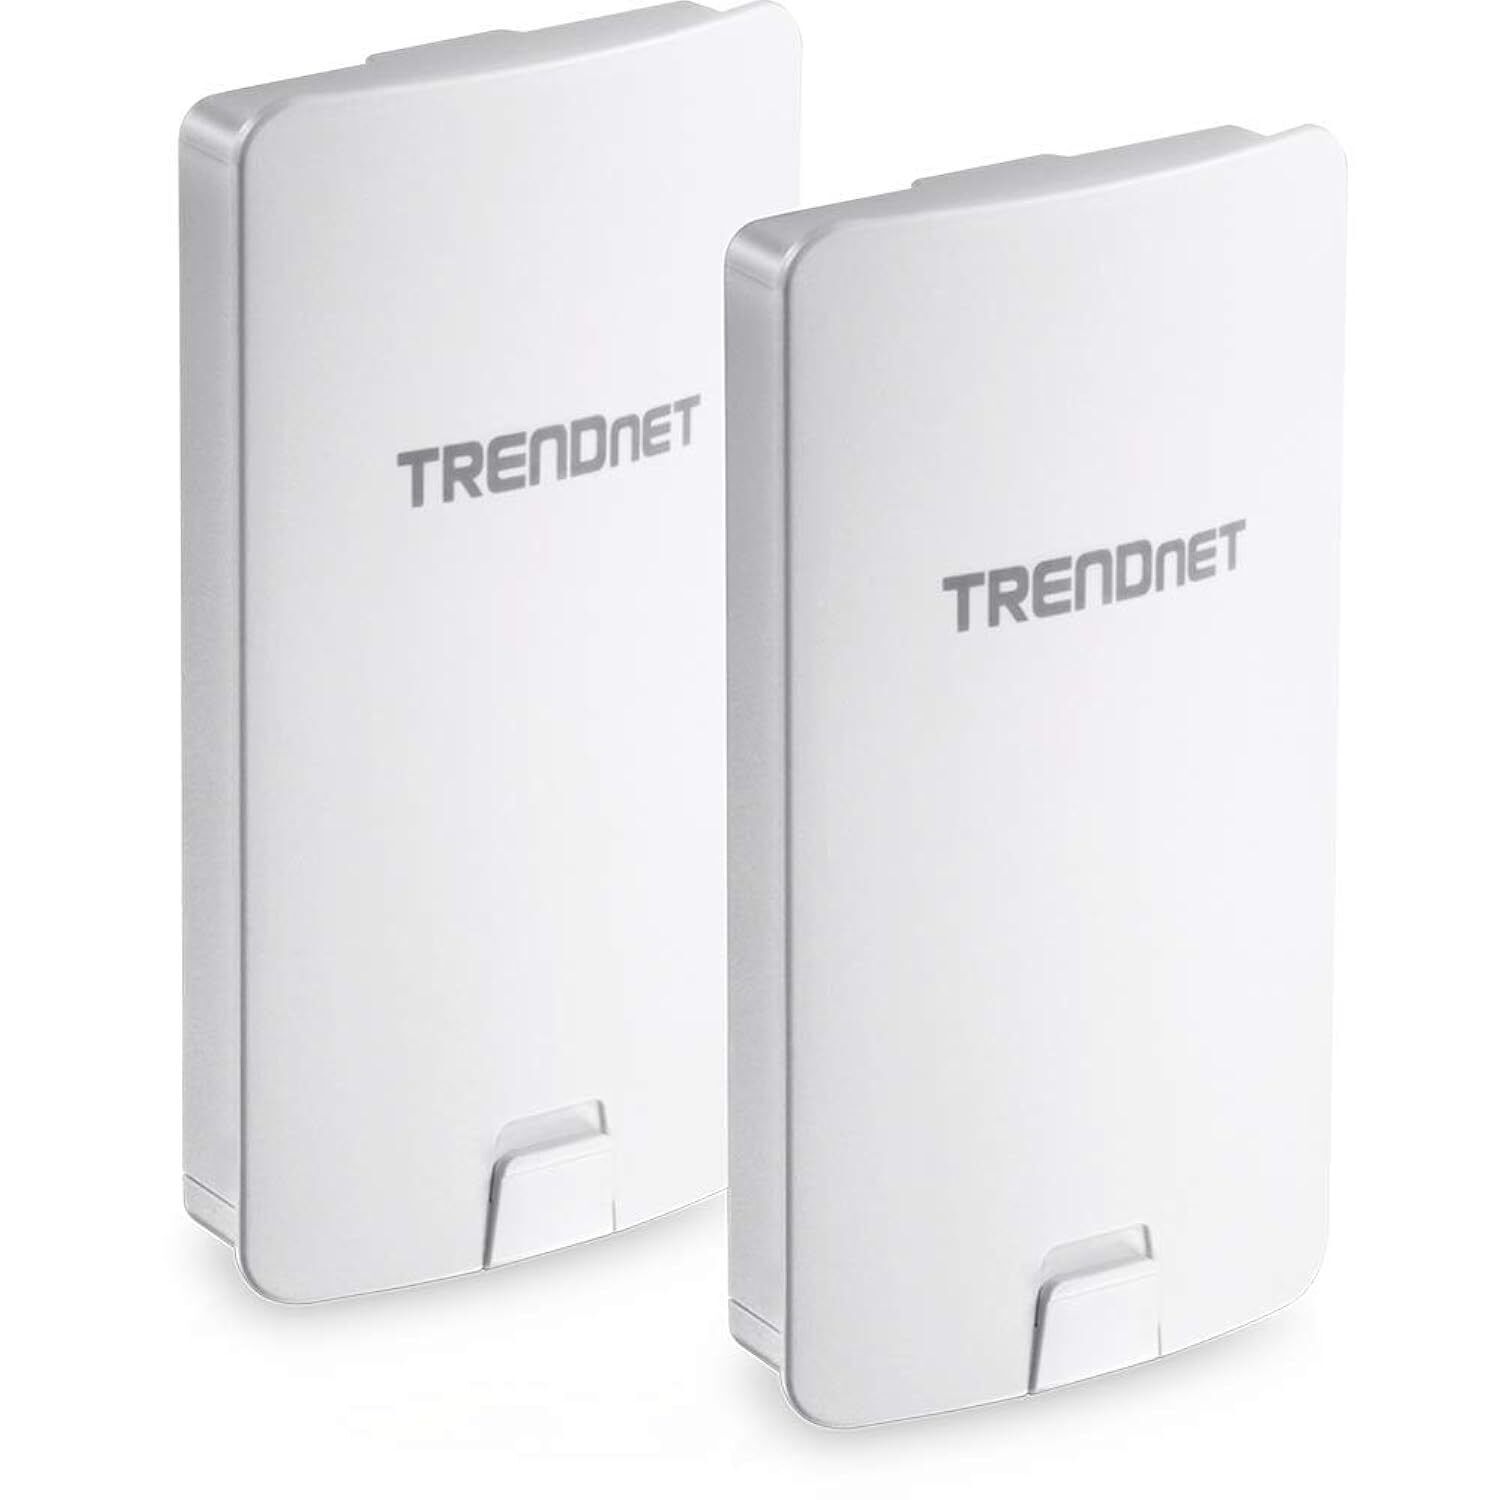 TRENDnet 14 DBI WiFi AC867 Outdoor Poe Preconfigured Point-to-Point Bridge Kit